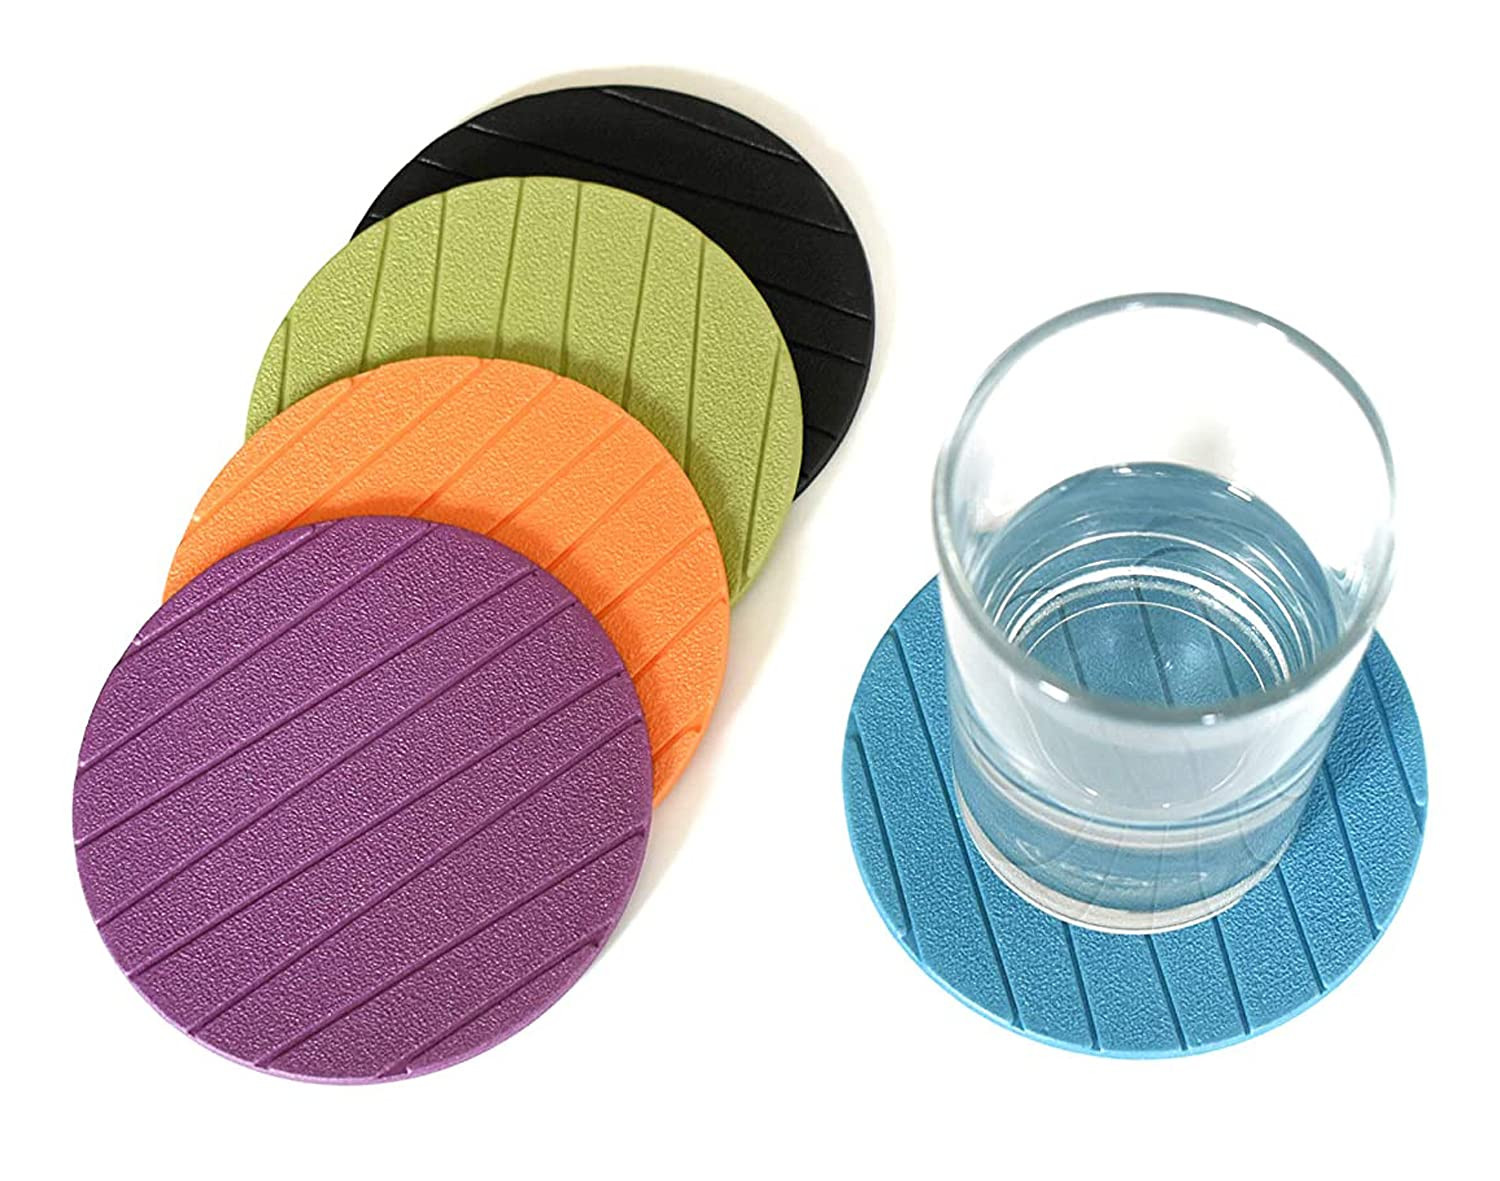 Kuber Industries Coaster | Round Drink Coasters | Foam Tea Coasters for Kitchen | Coasters for Dining Table | Office Desk Coasters | Lining Round Coaster |Orange